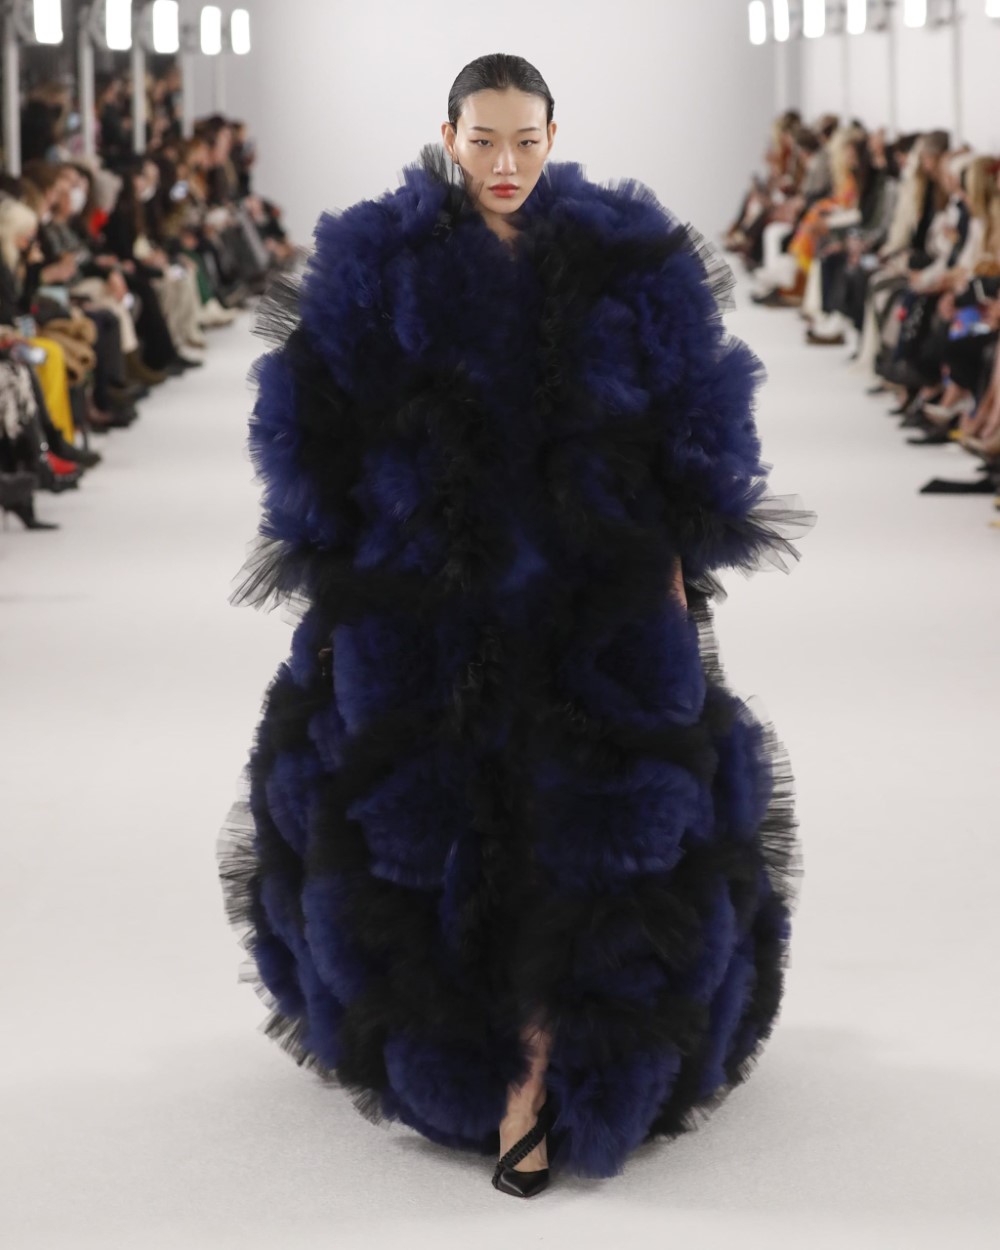 Carolina Herrera Fall Winter 2022 - New York Fashion Week